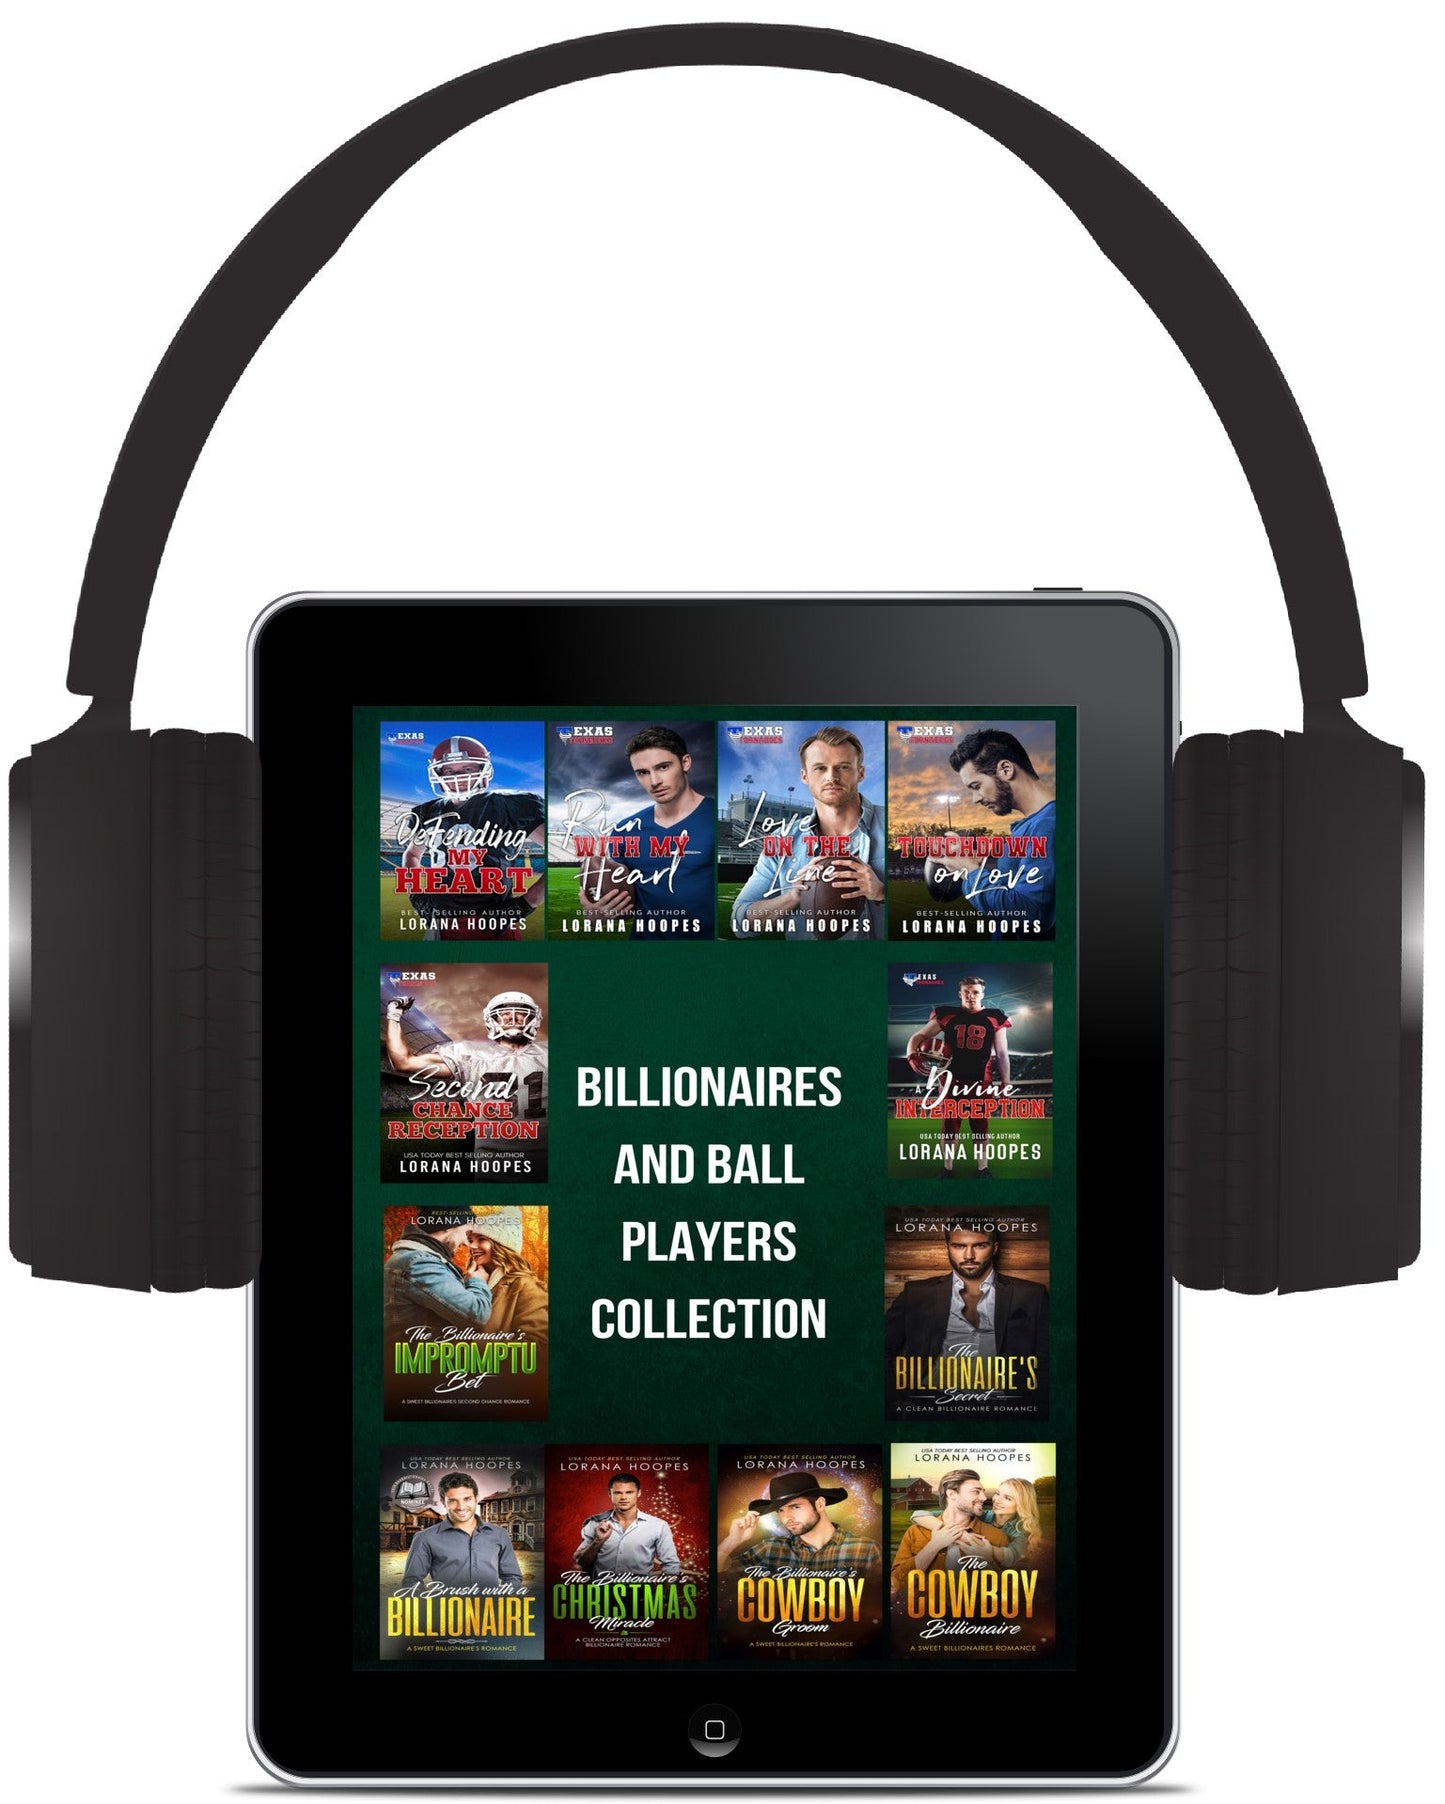 Billionaires and Ballplayers audiobooks